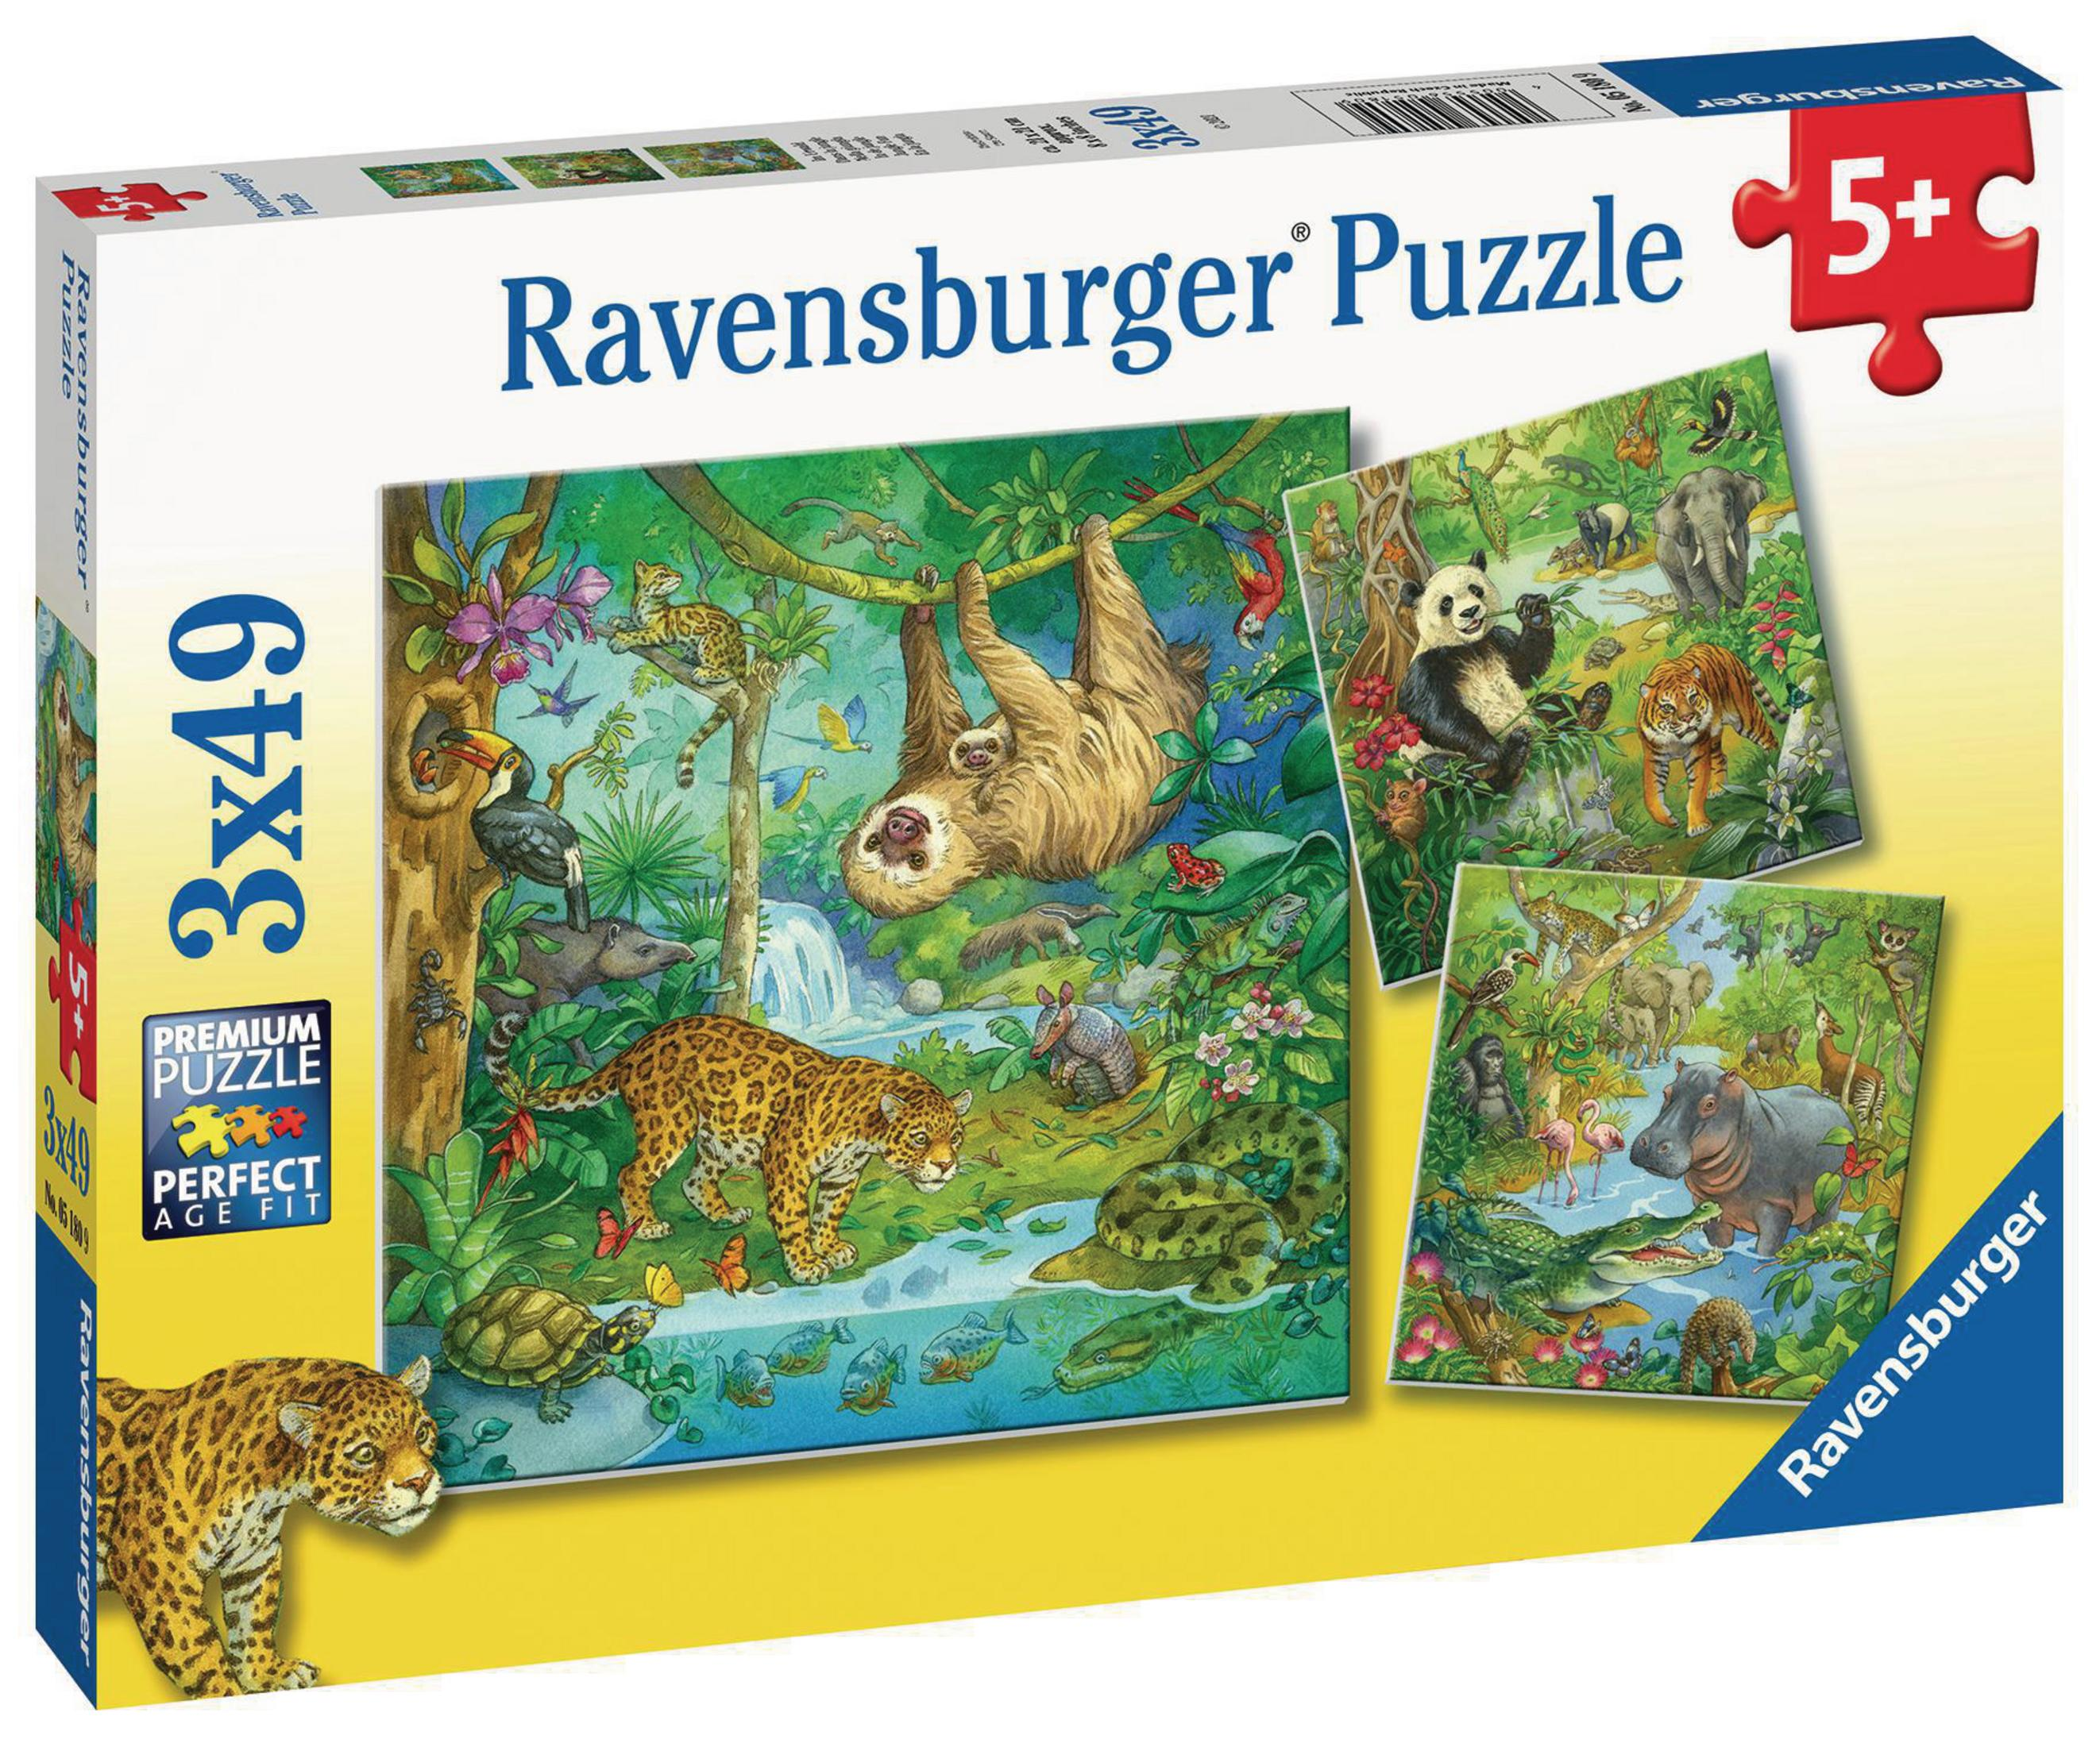 URWALD IM RAVENSBURGER 05180 Puzzle